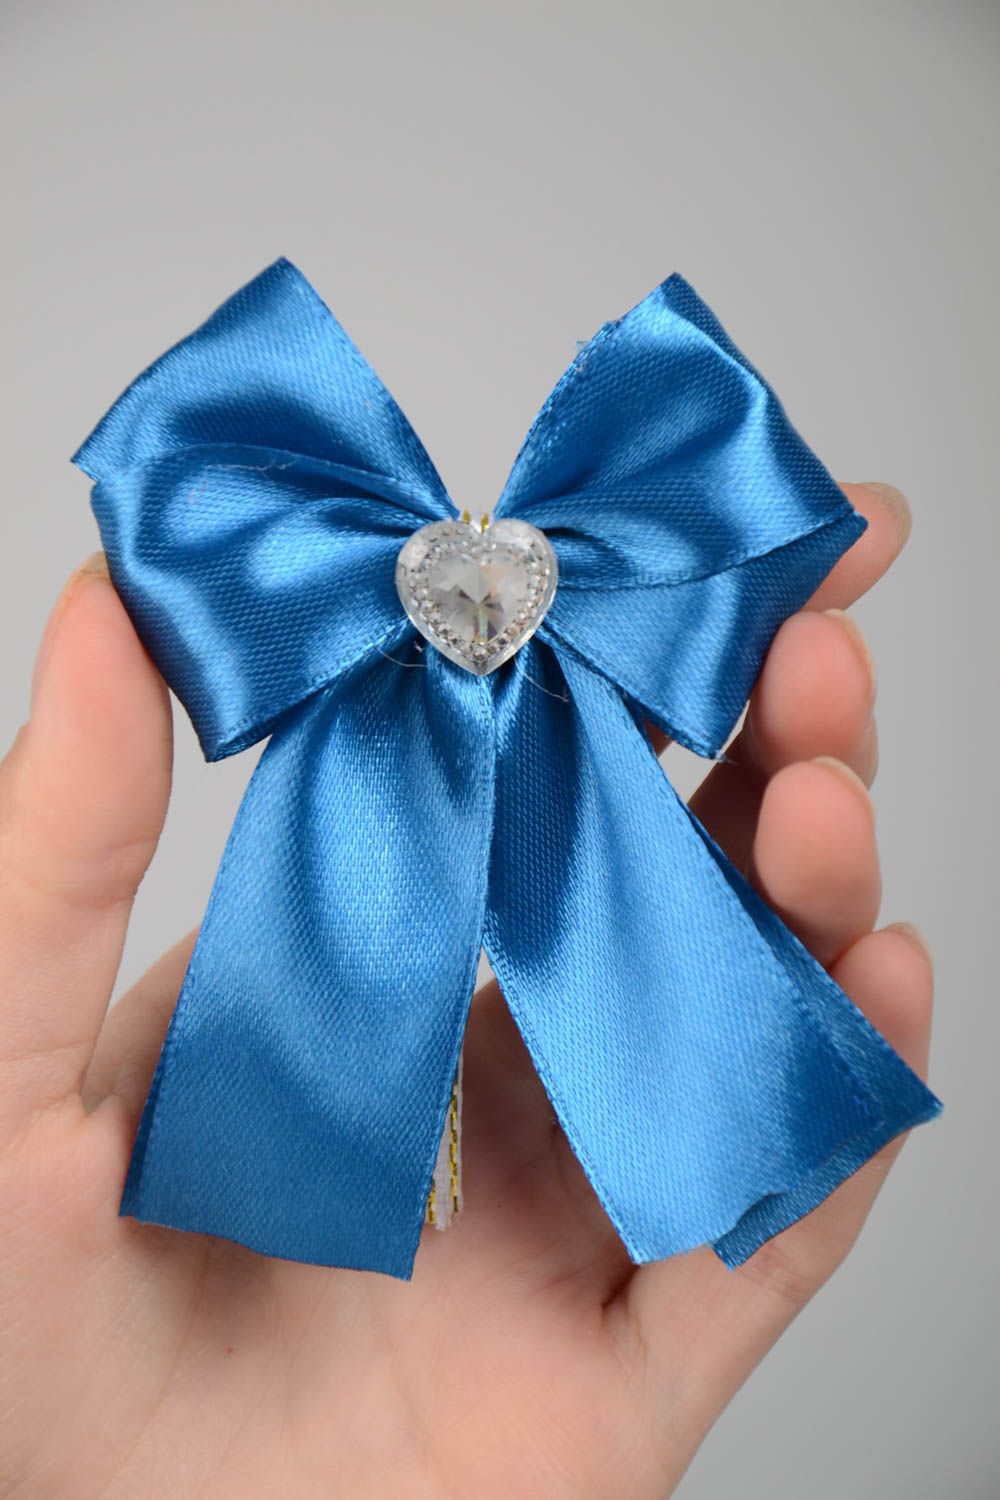 Handmade bow made of satin ribbons for decor interior wedding accessory photo 5